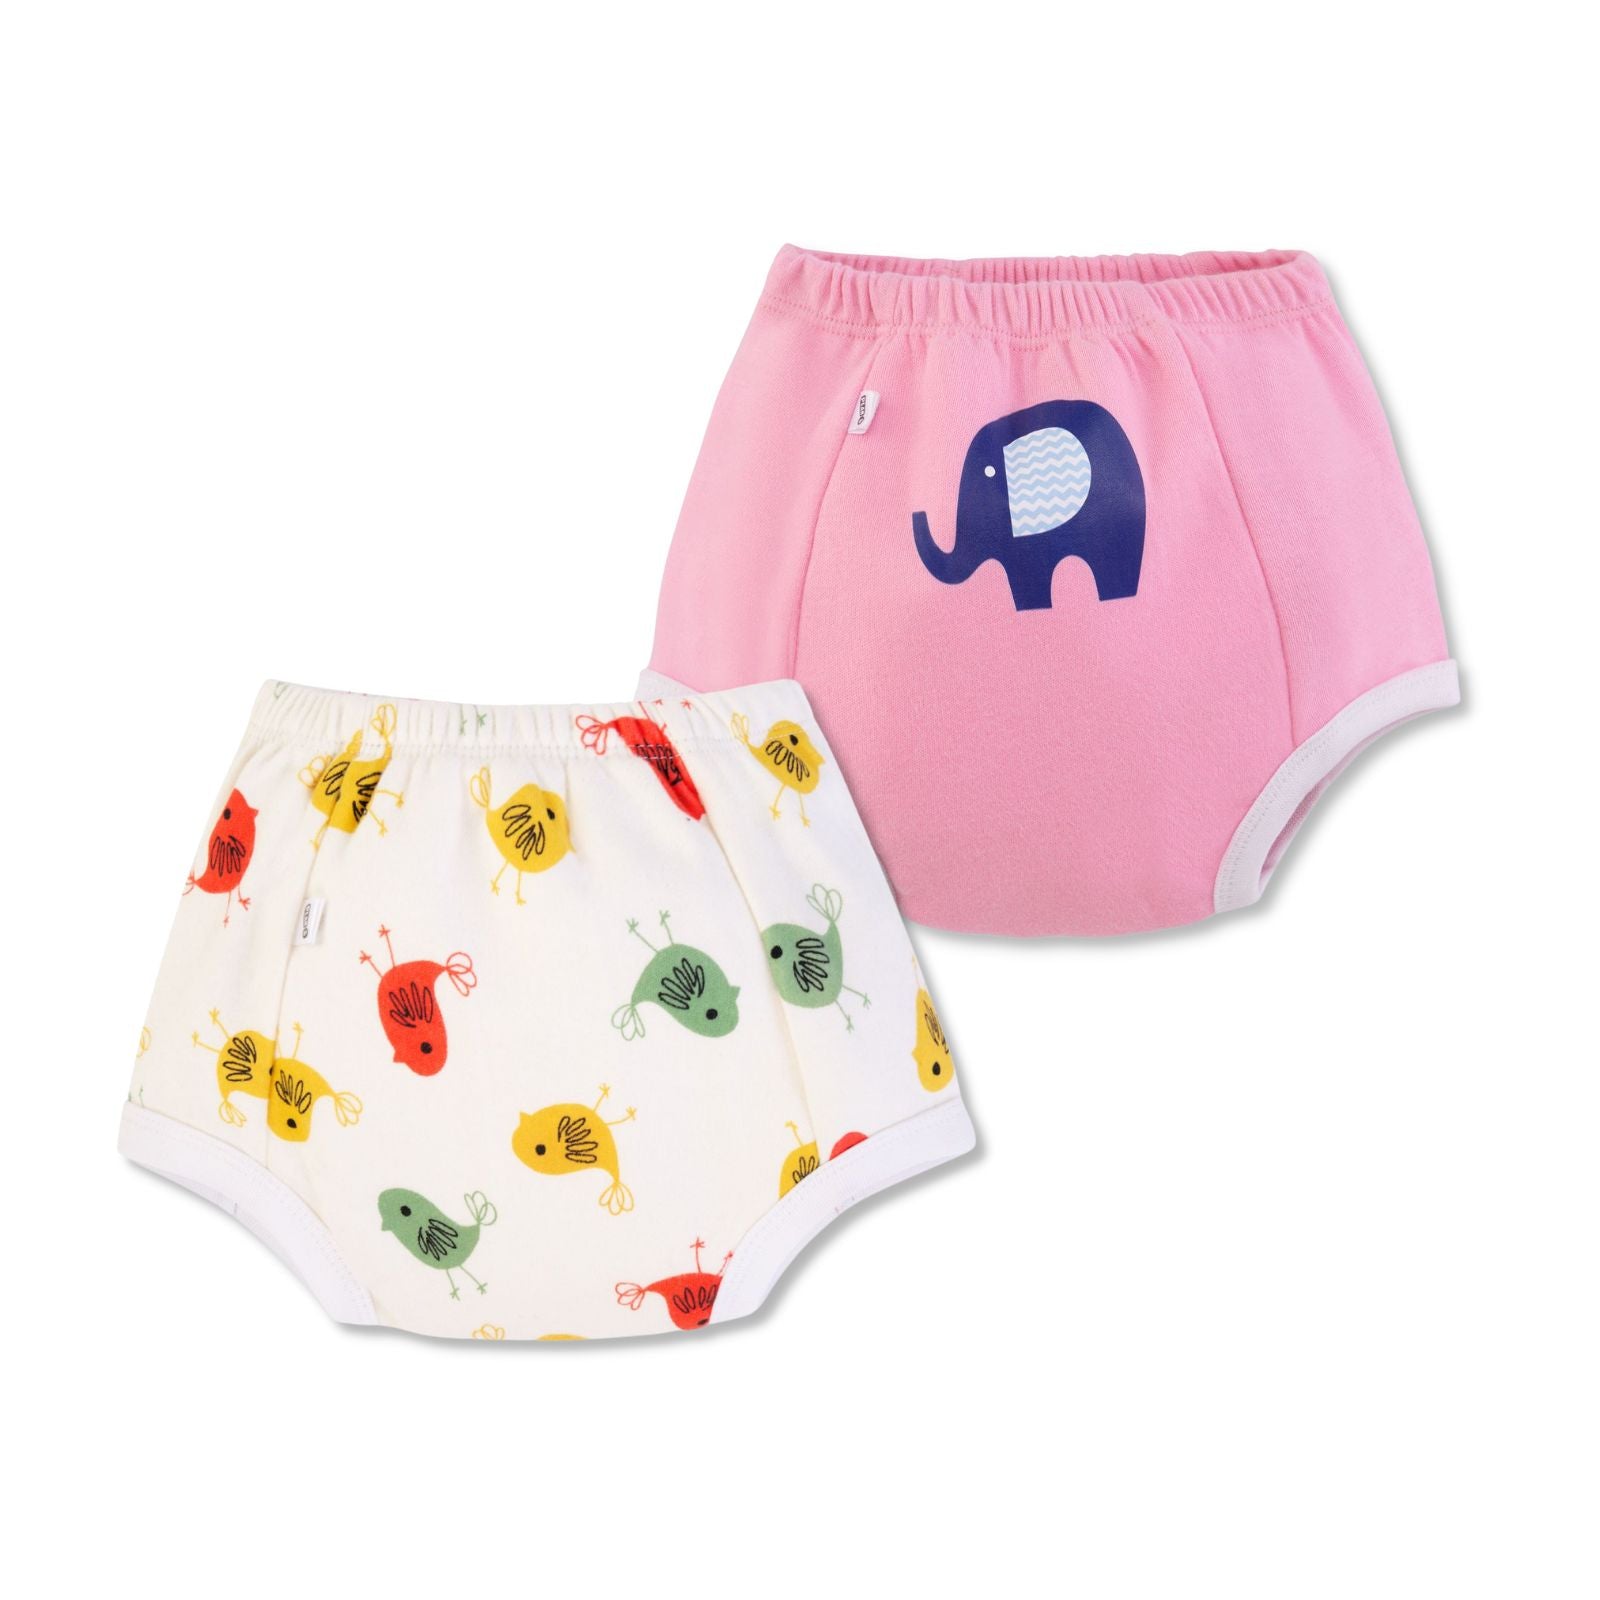 Padded Underwear for Potty Training - 2pack - Big Short – Plan B